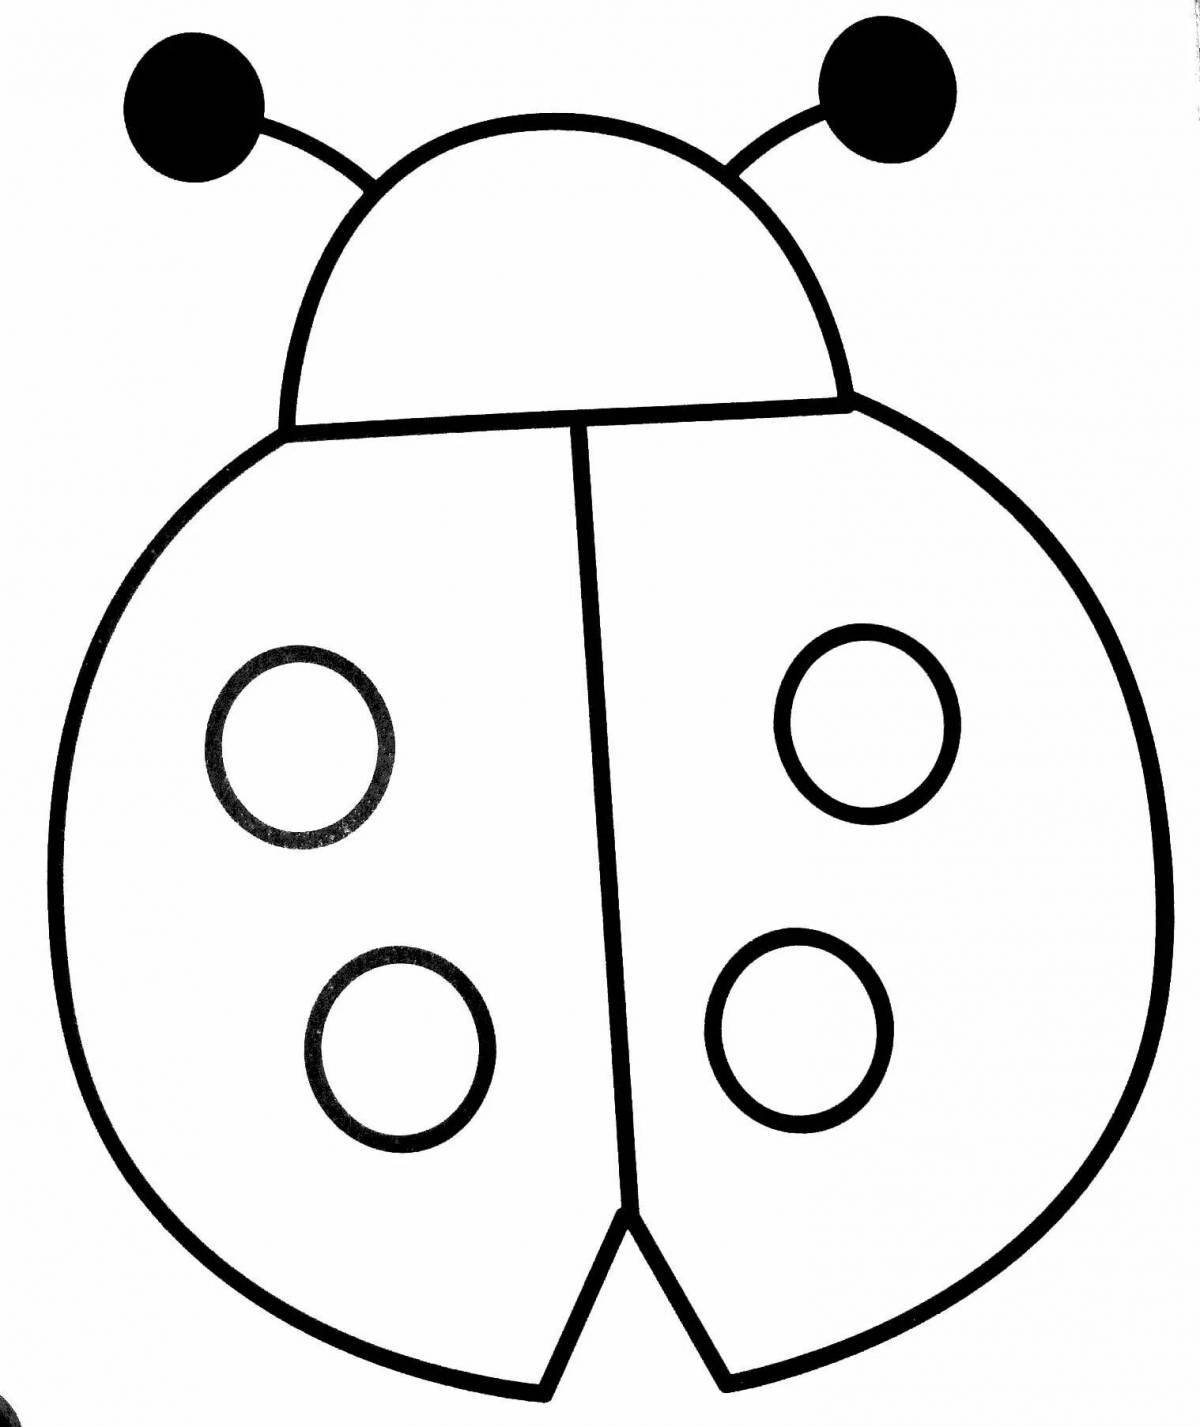 Playful drawing of a ladybug